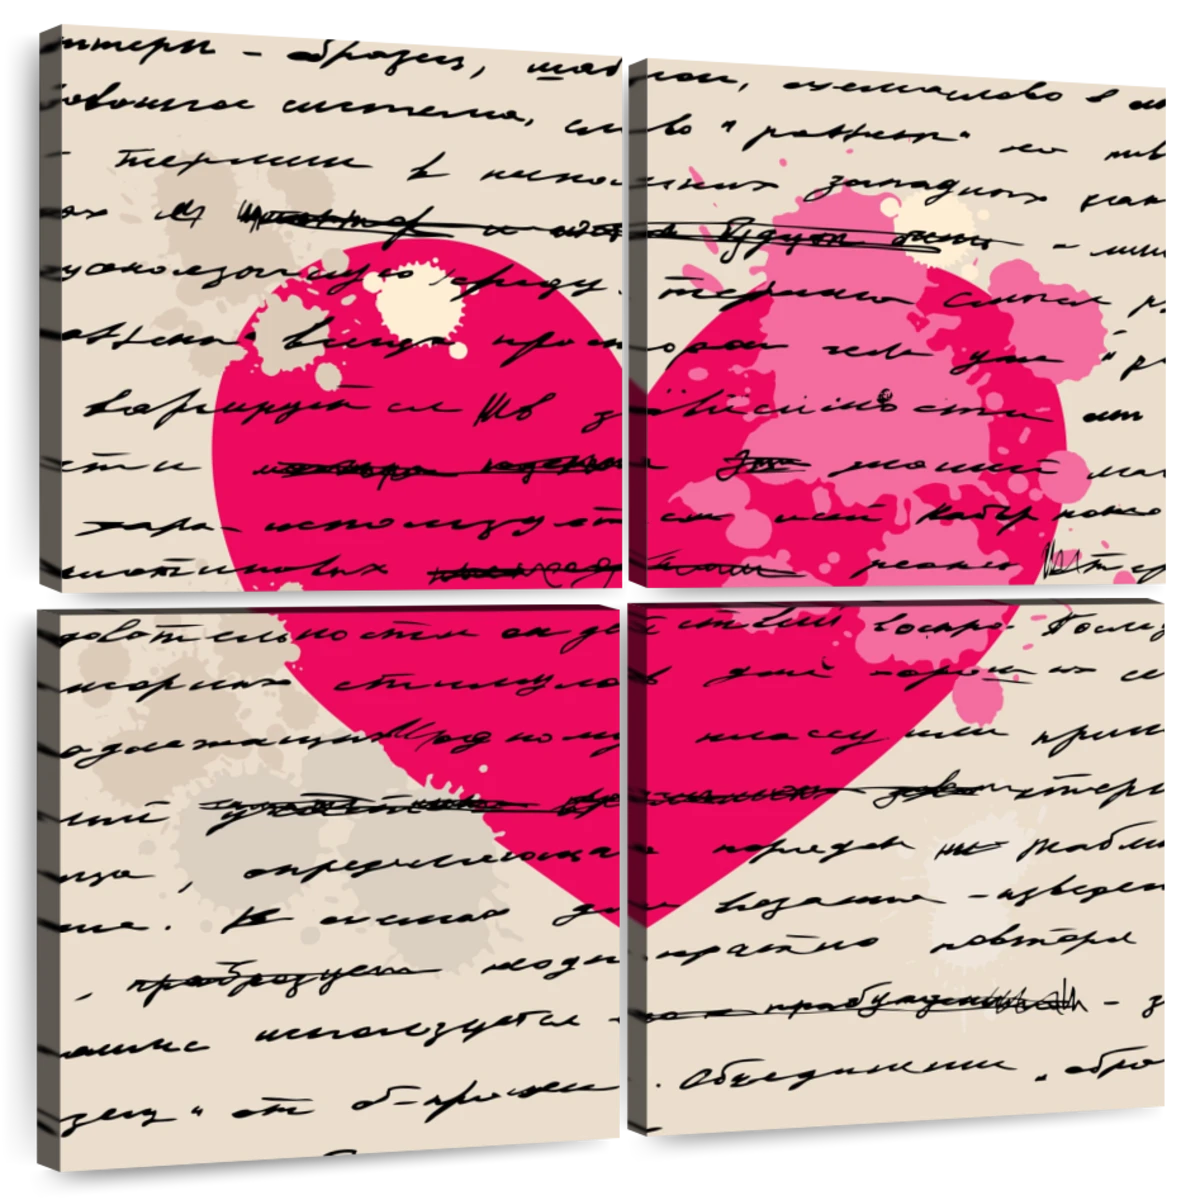 Love Letter Heart Wall Art